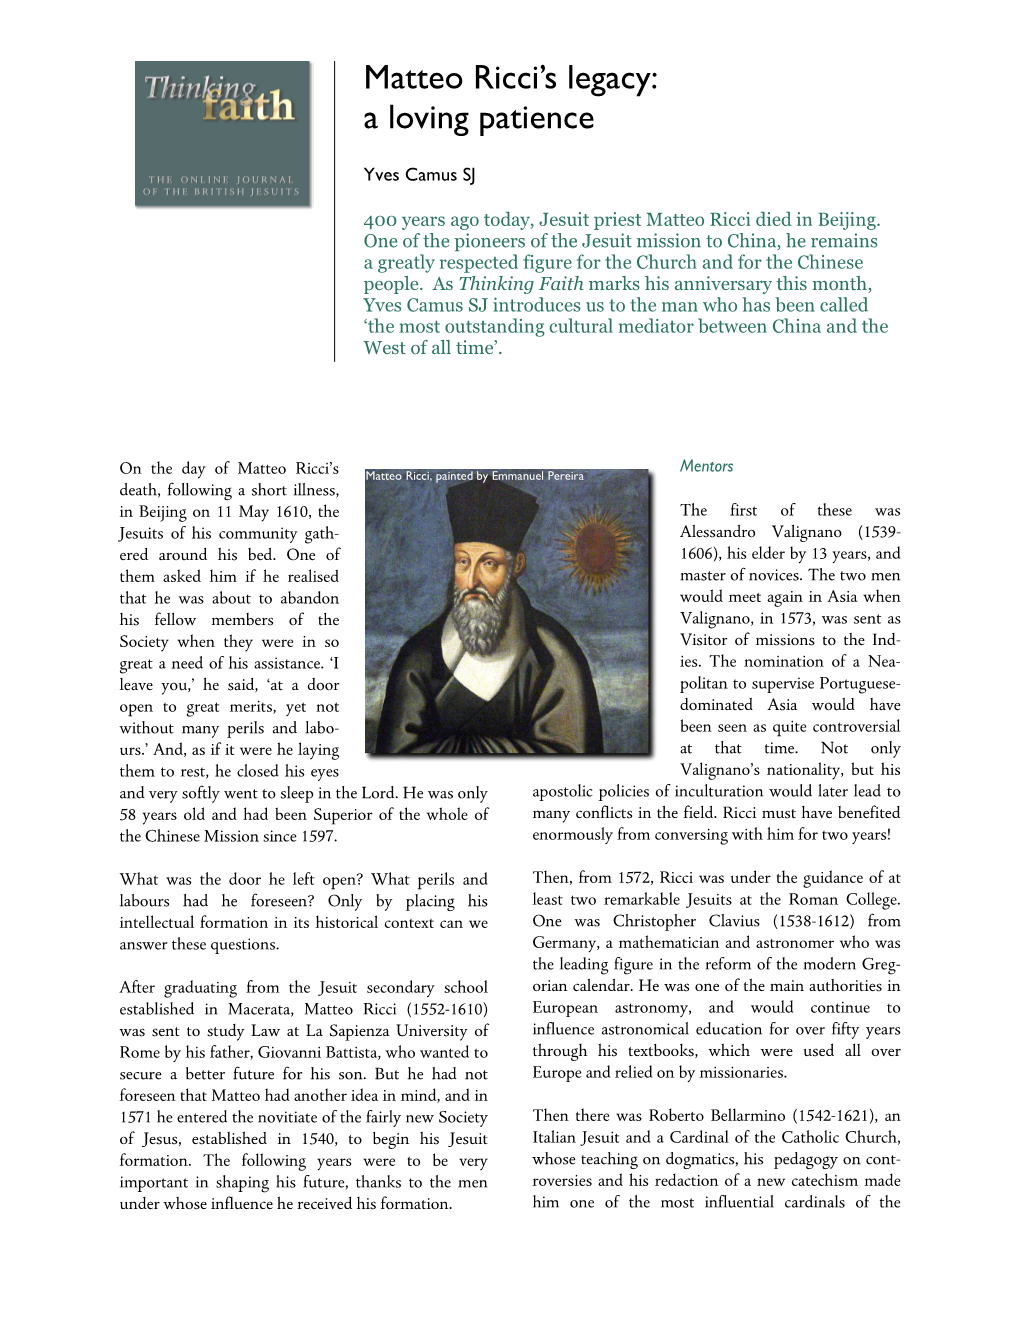 Matteo Ricci's Legacy